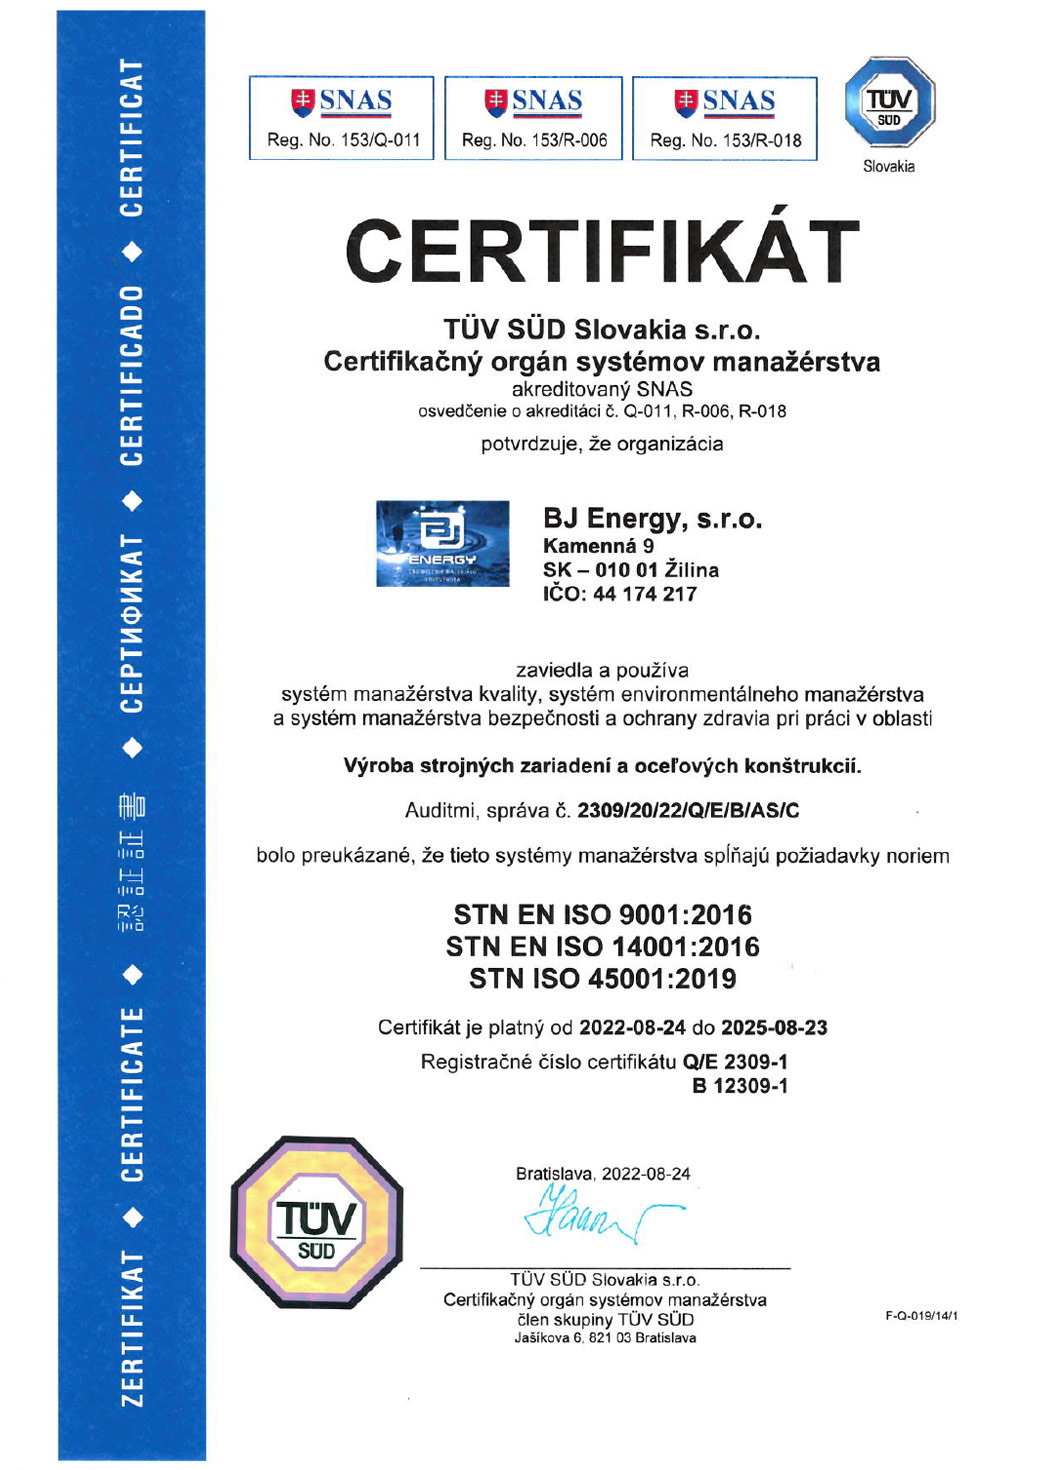 Certifikát ISO 9001 14001 45001